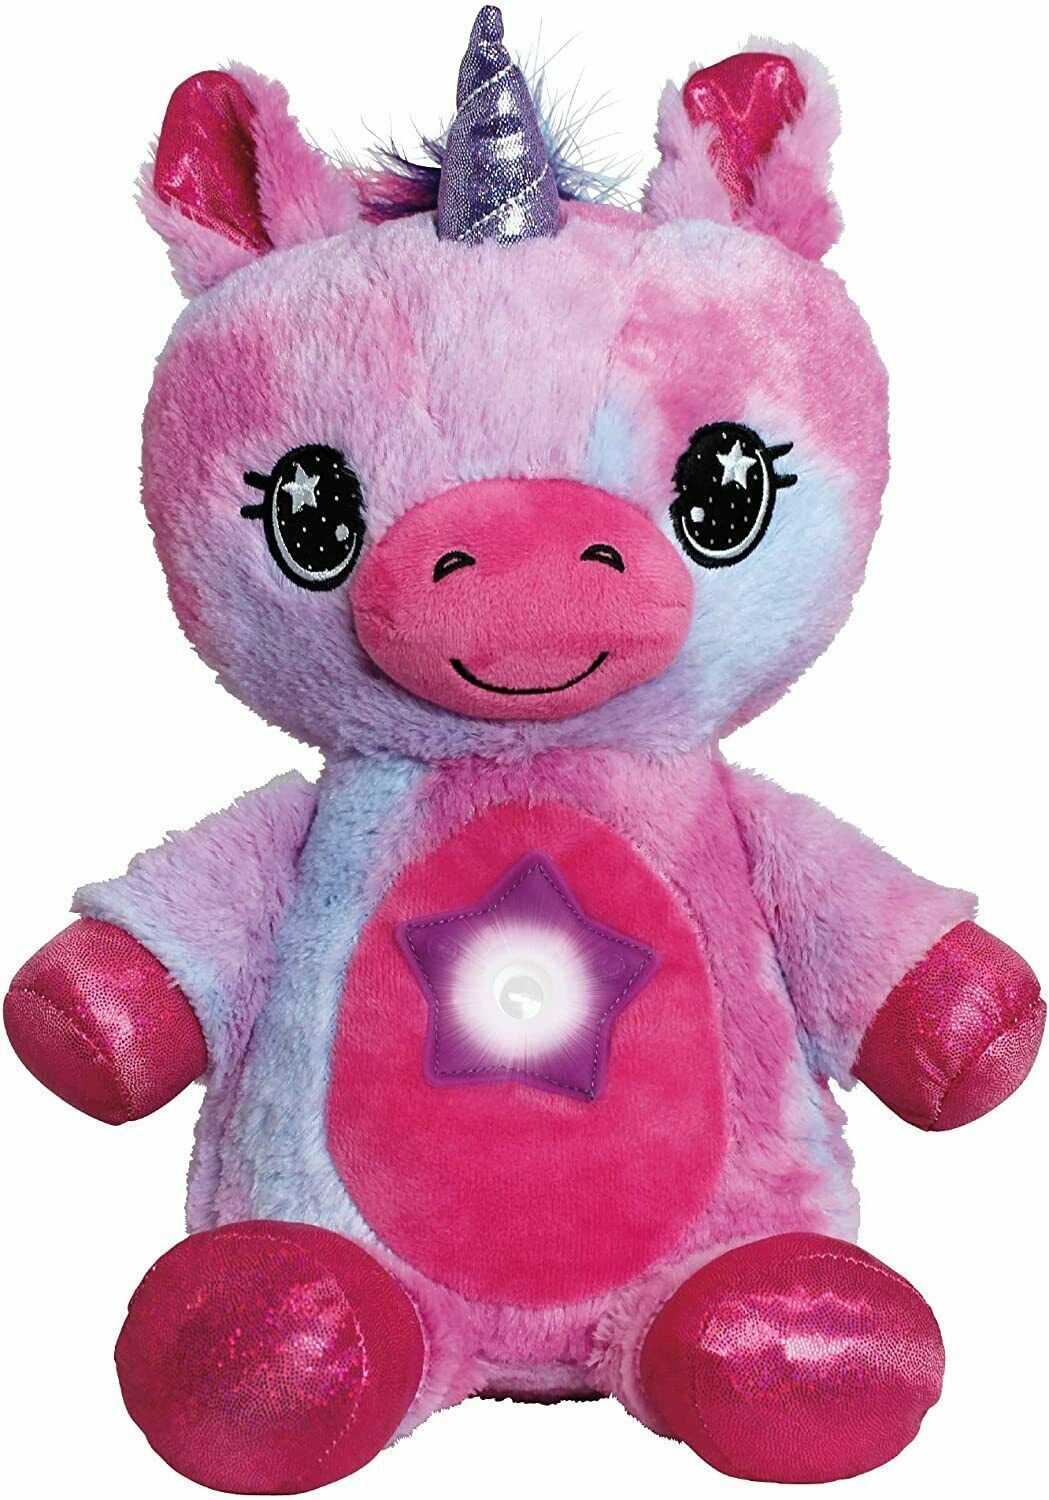 Star Belly Dream Lites Stuffed Animal Night Light Pink and Purple Unicorn No Box